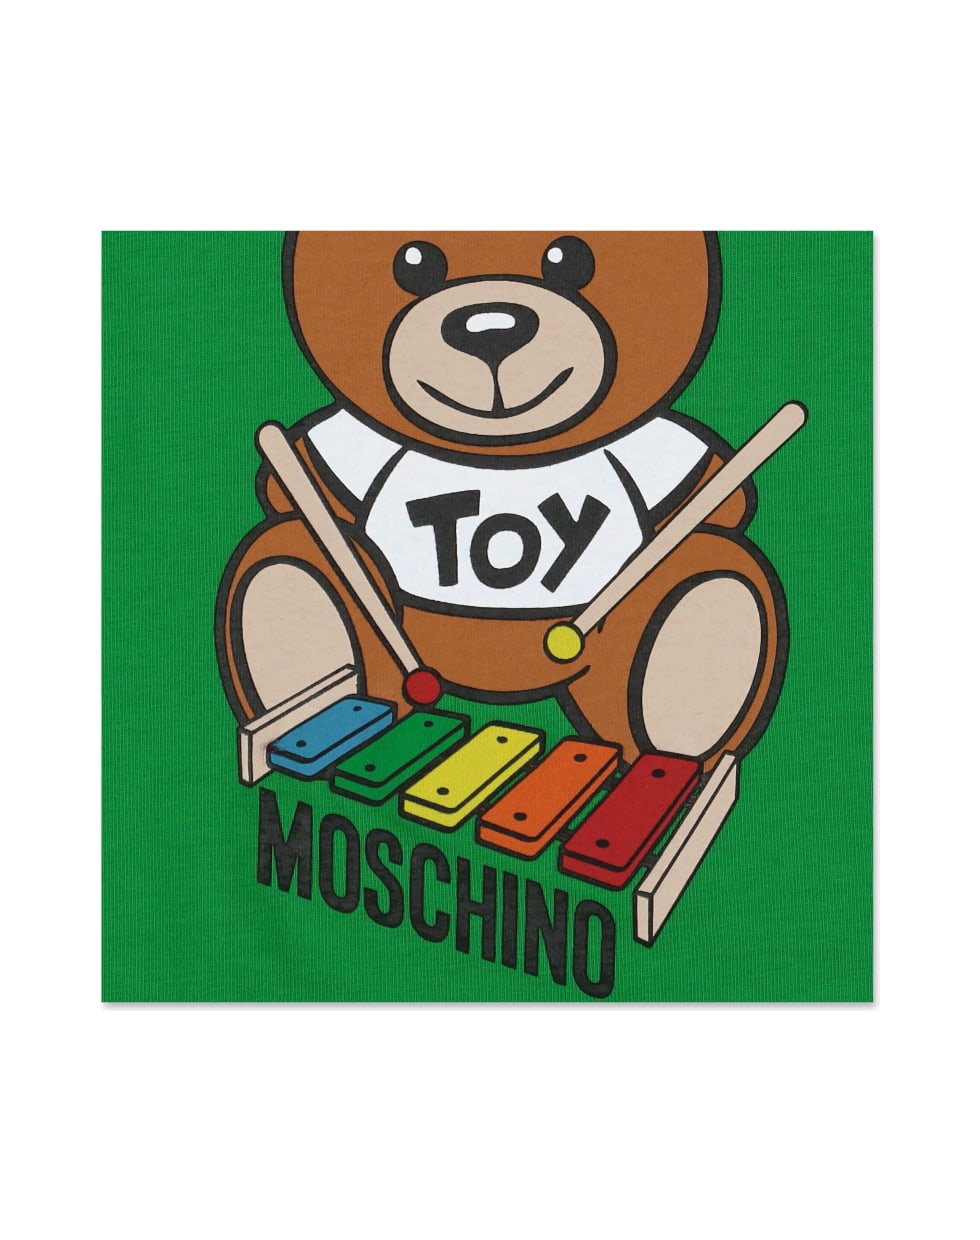 Moschino T-shirt Verde Teddy Bear In Jersey Di Cotone - Verde